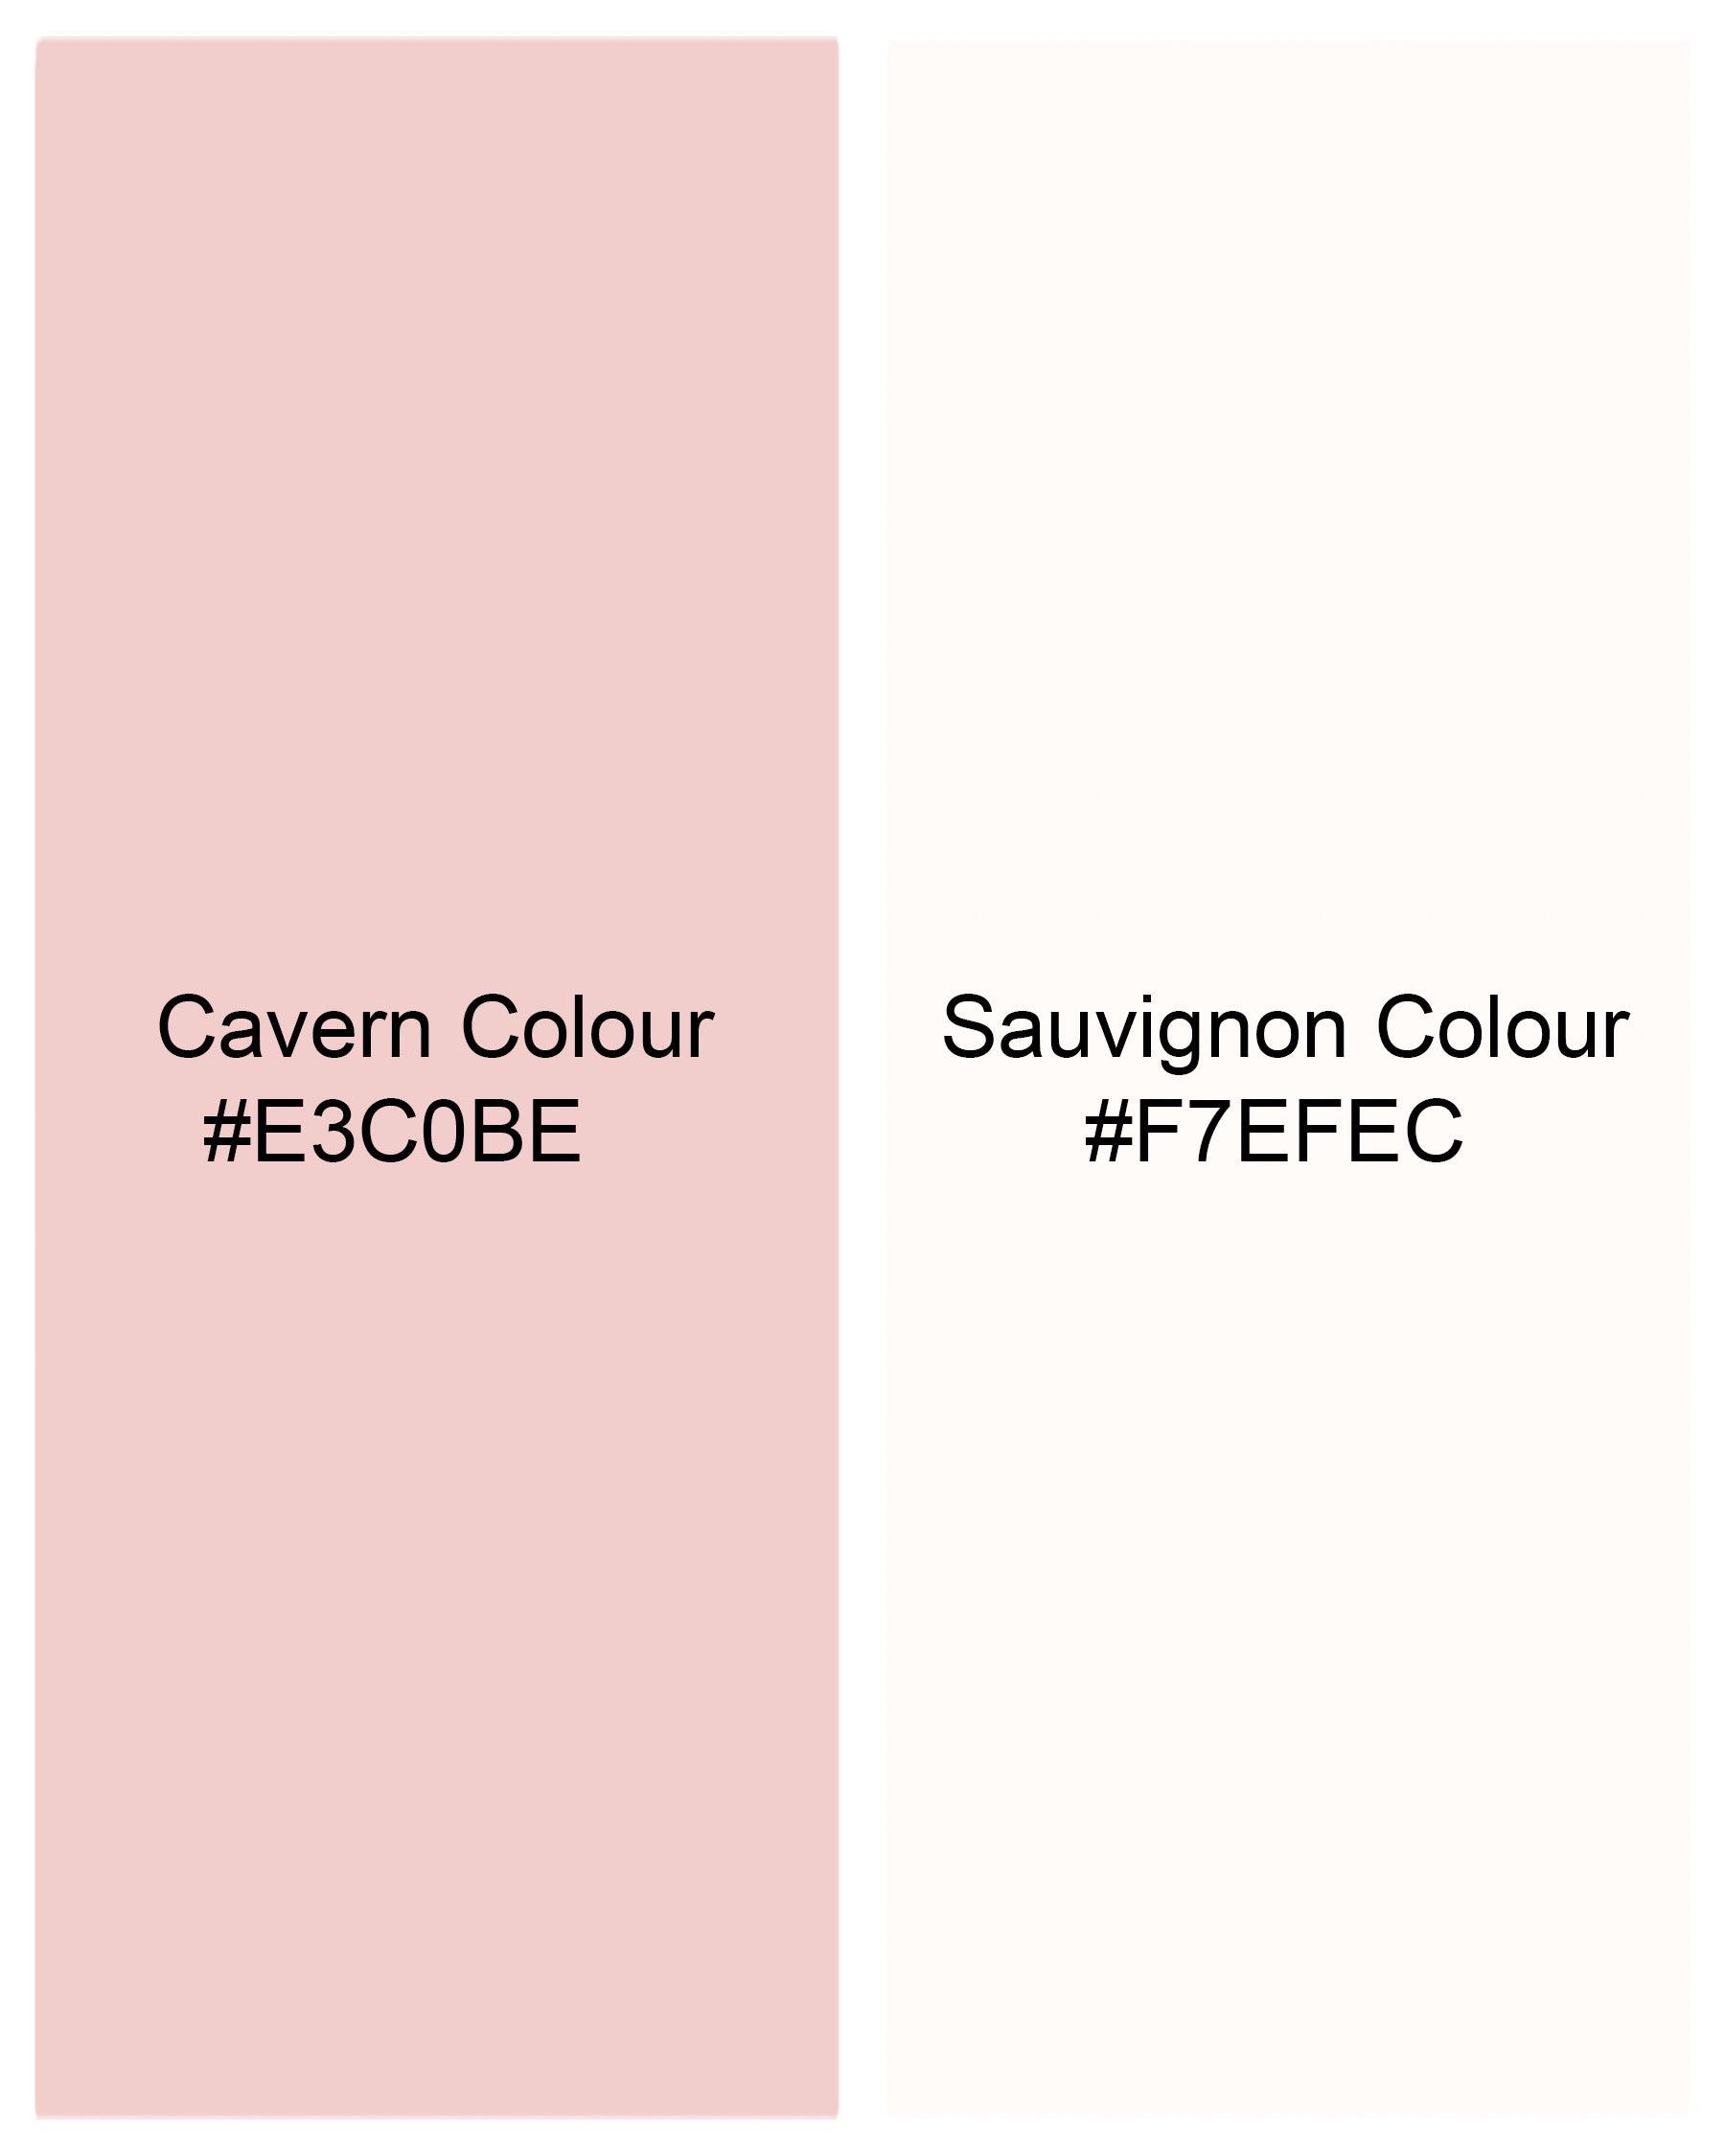 Cavern Pink with Sauvignon Beige Striped Premium Cotton Kurta Shirt8024-KS-38,8024-KS-H-38,8024-KS-39,8024-KS-H-39,8024-KS-40,8024-KS-H-40,8024-KS-42,8024-KS-H-42,8024-KS-44,8024-KS-H-44,8024-KS-46,8024-KS-H-46,8024-KS-48,8024-KS-H-48,8024-KS-50,8024-KS-H-50,8024-KS-52,8024-KS-H-52